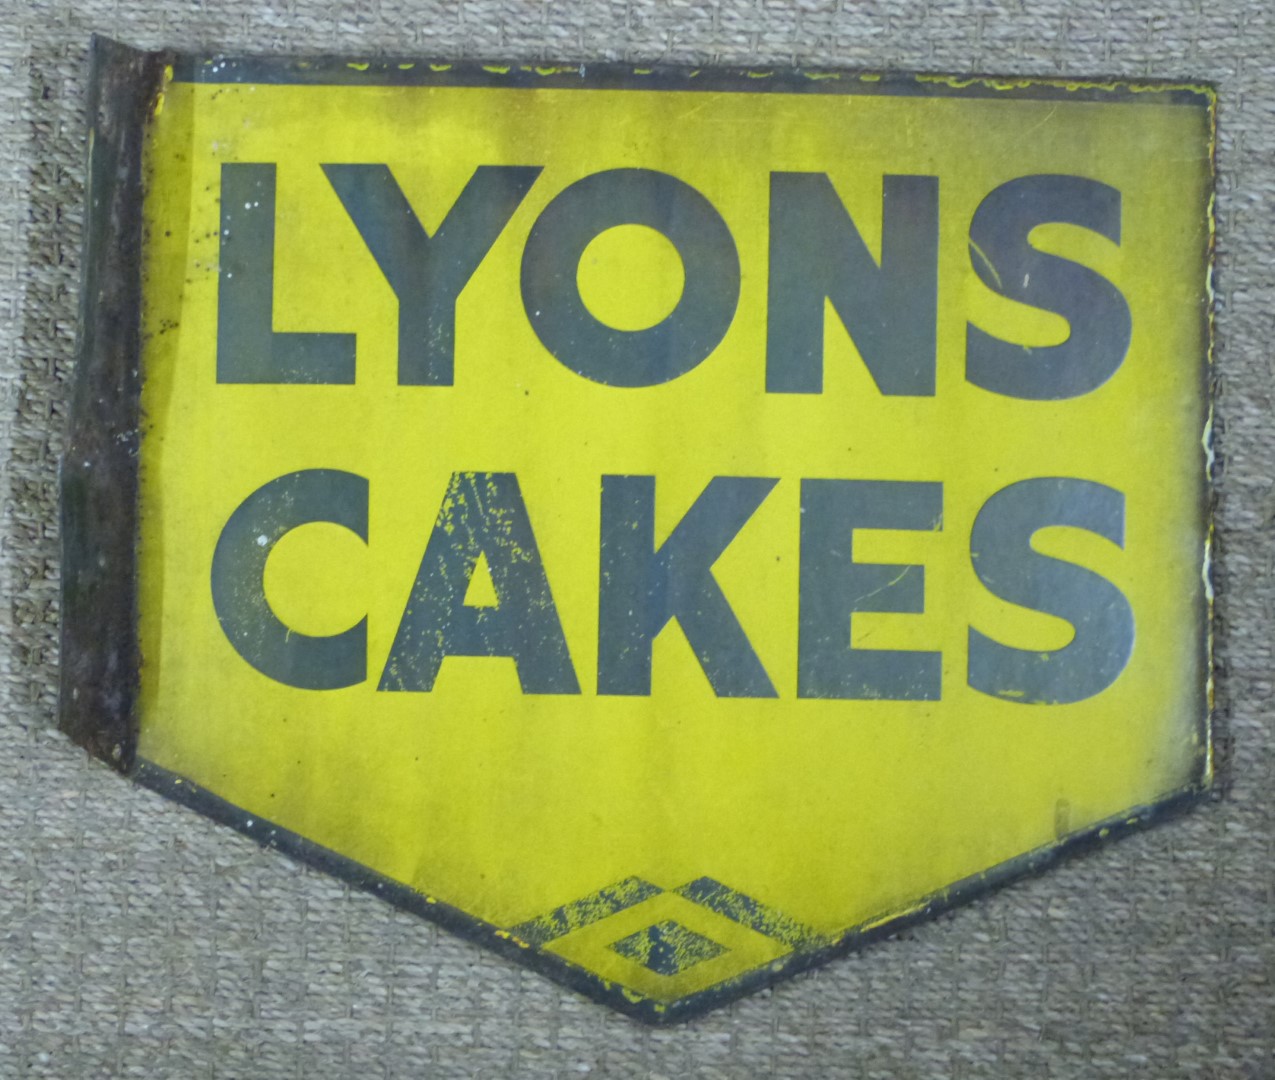 Lyons Cakes double sided vintage enamel advertising sign, 39.5 x 44cm - Image 2 of 3